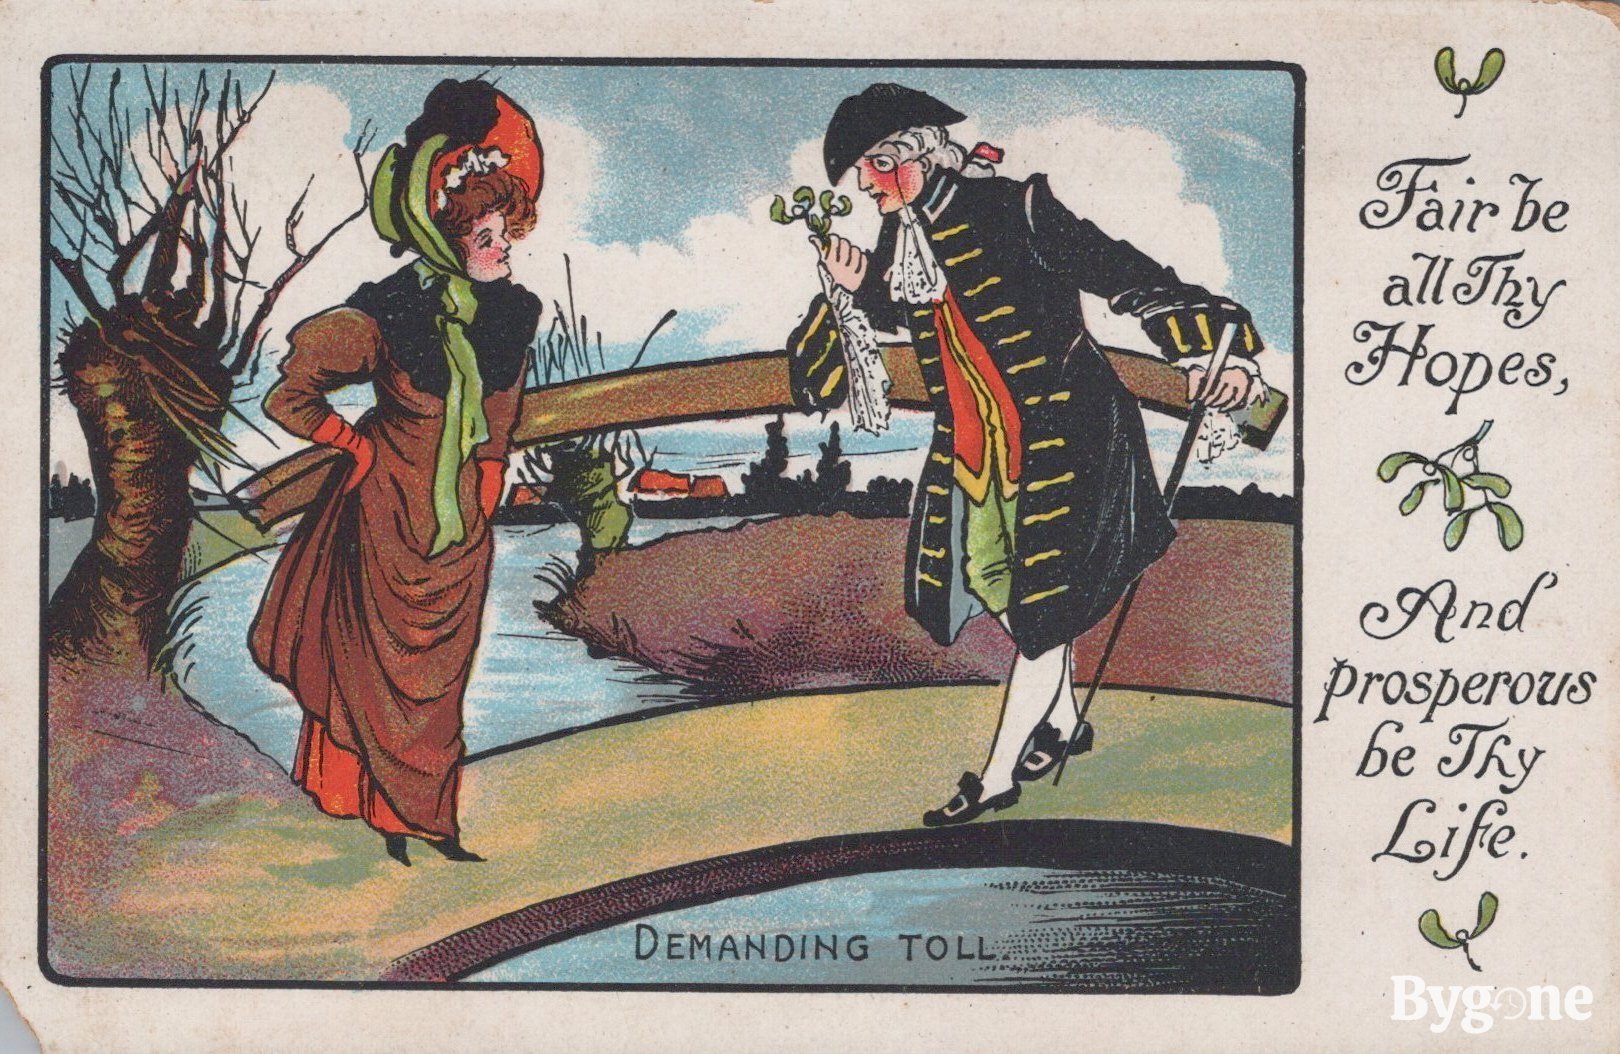 "Demanding Toll" postcard